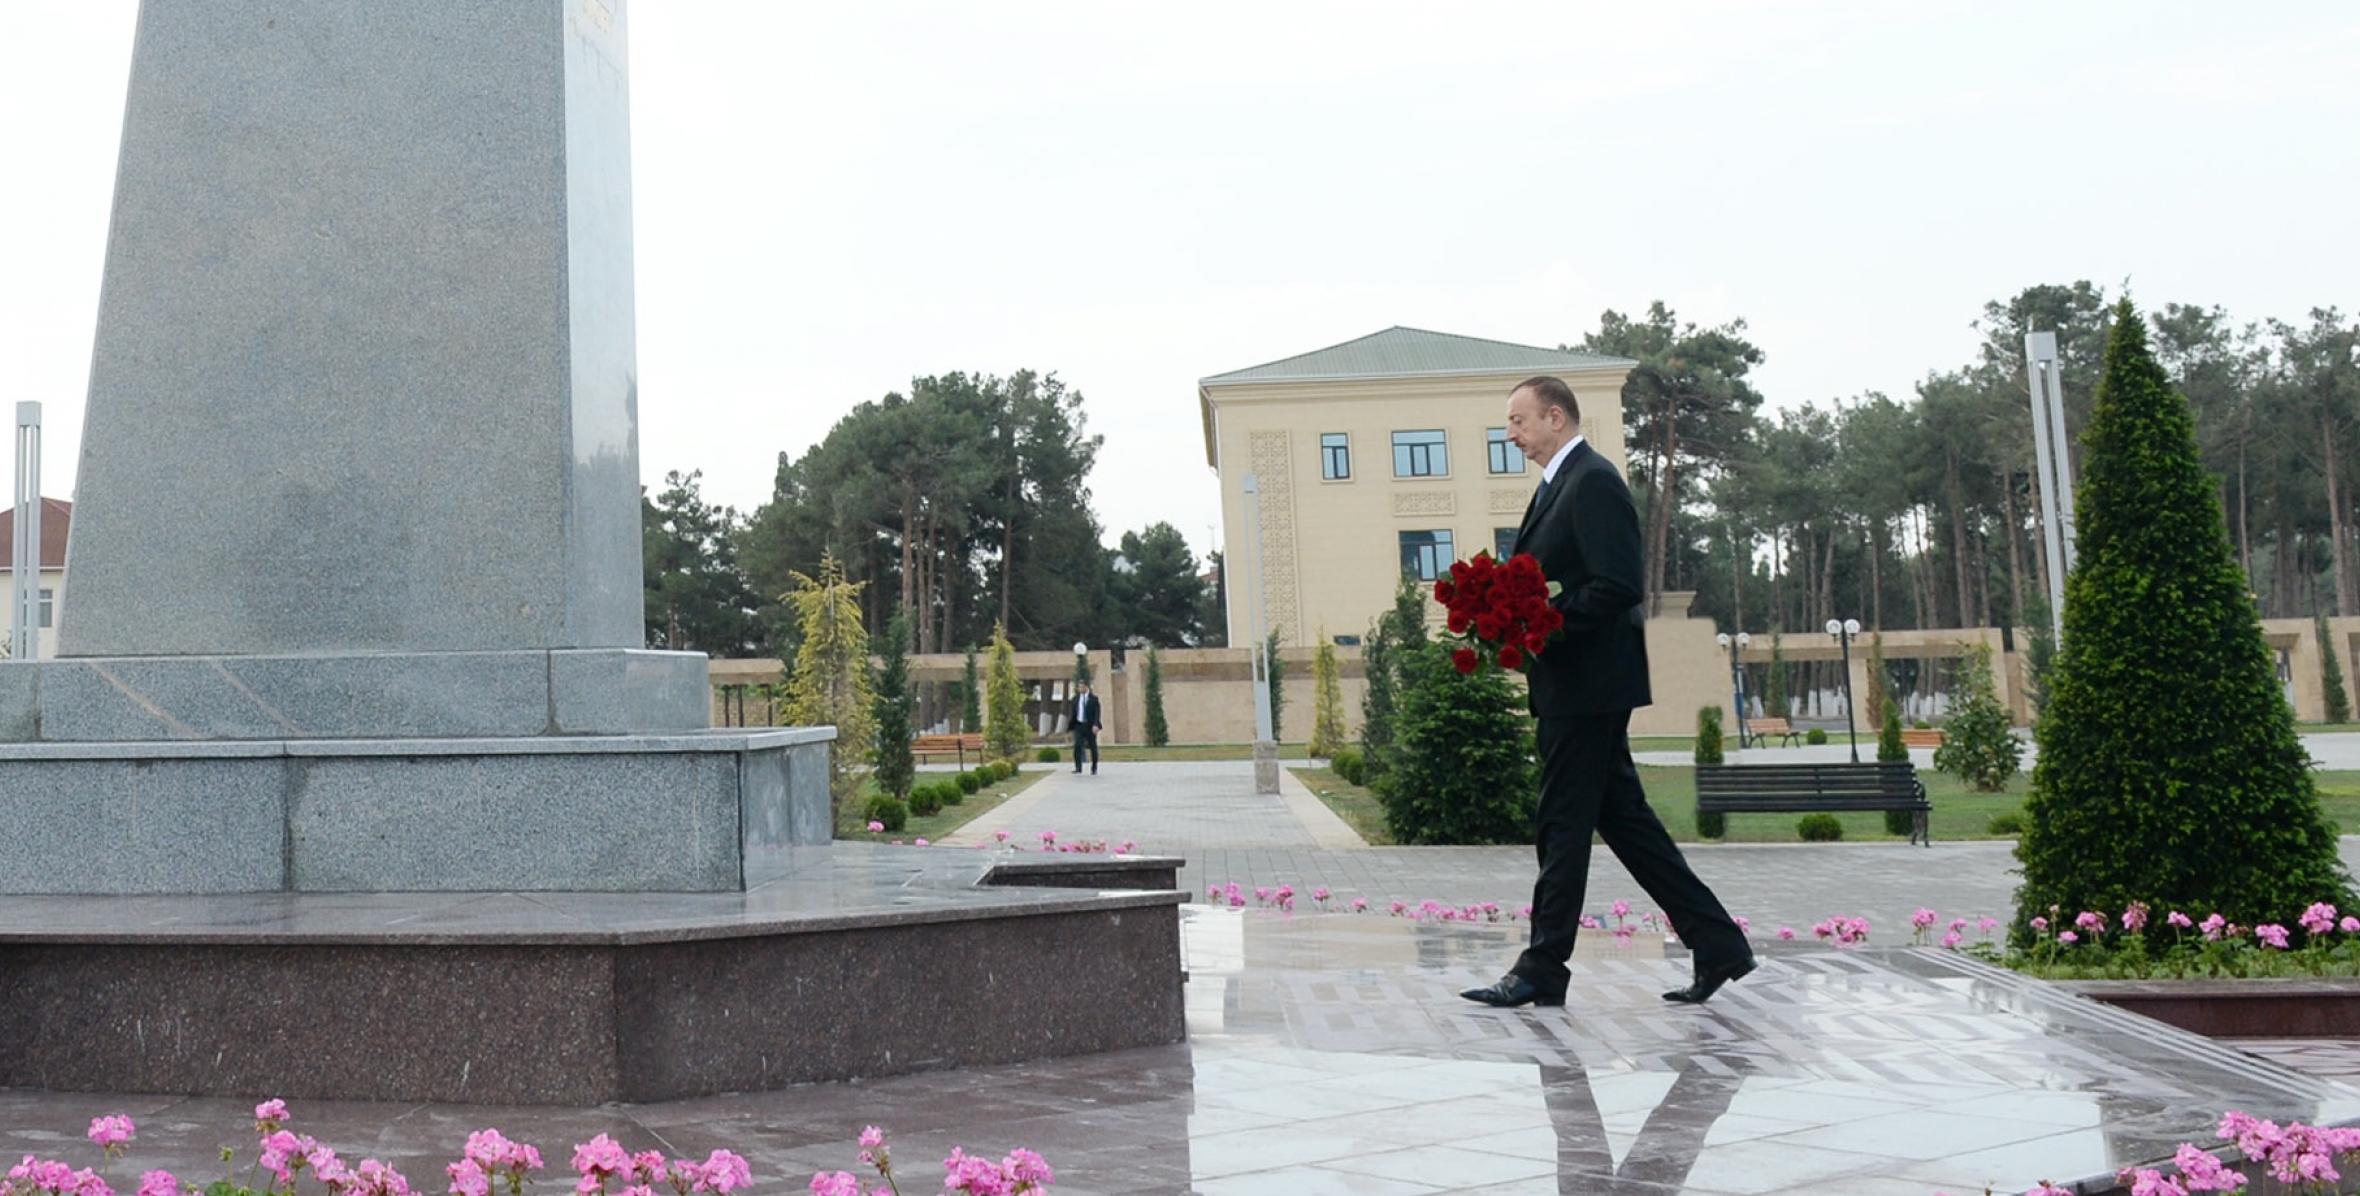 Ilham Aliyev arrived in Neftchala District on a visit